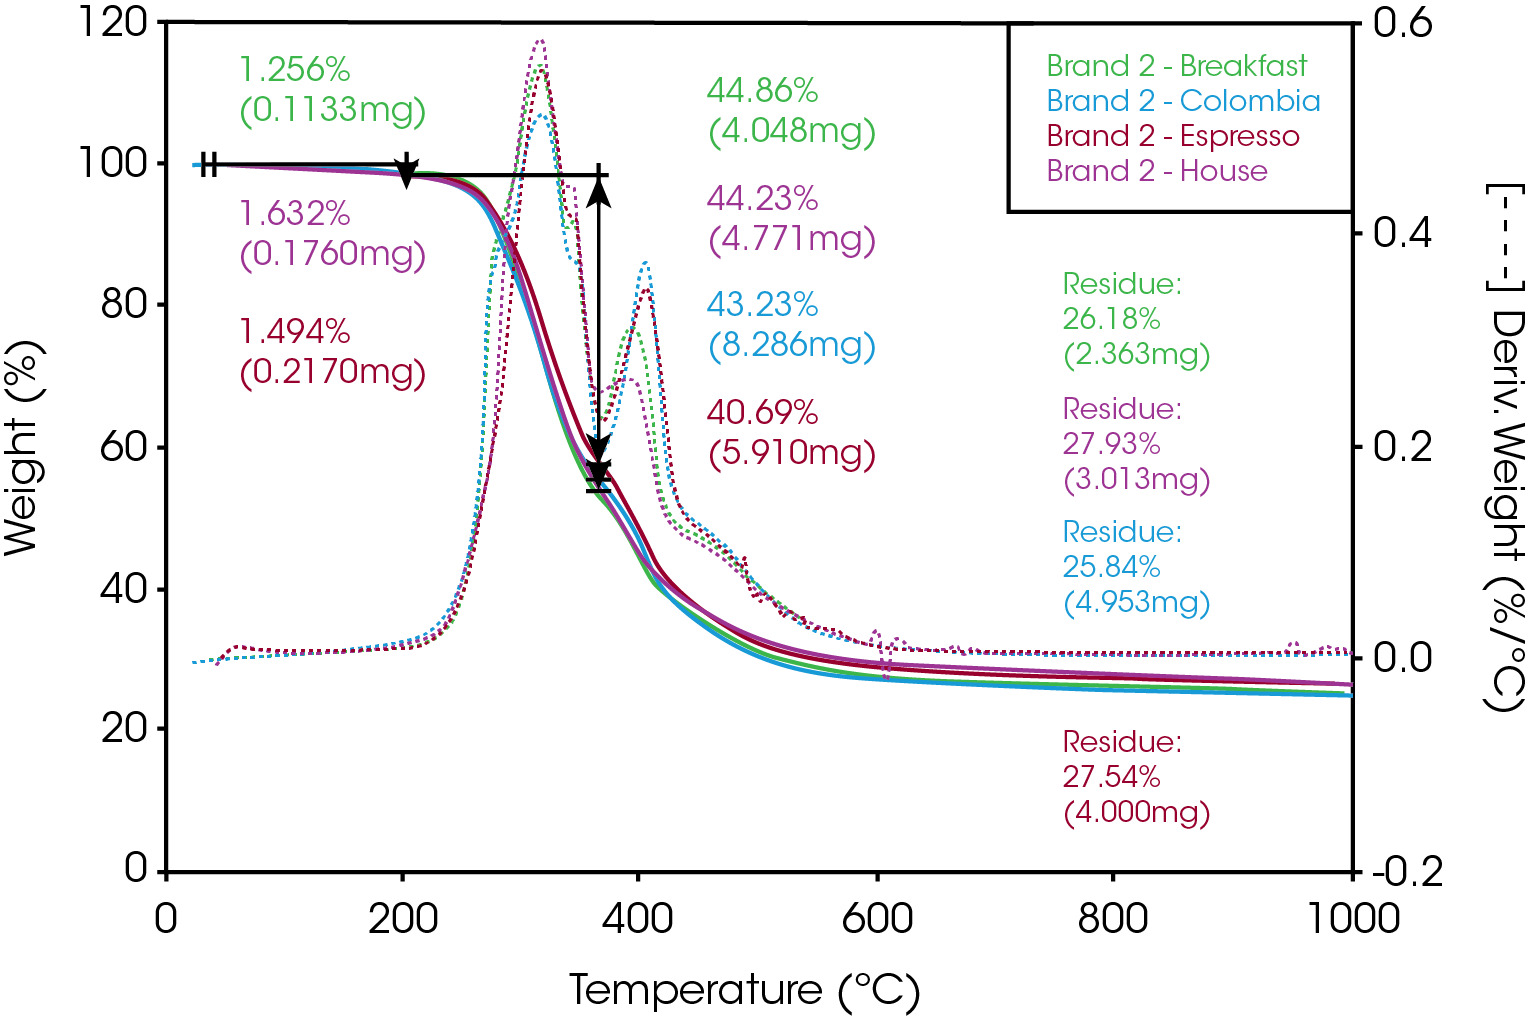 Figure 2. Overlay of TGA data for three different roast varieties of Brand 2 coffee.